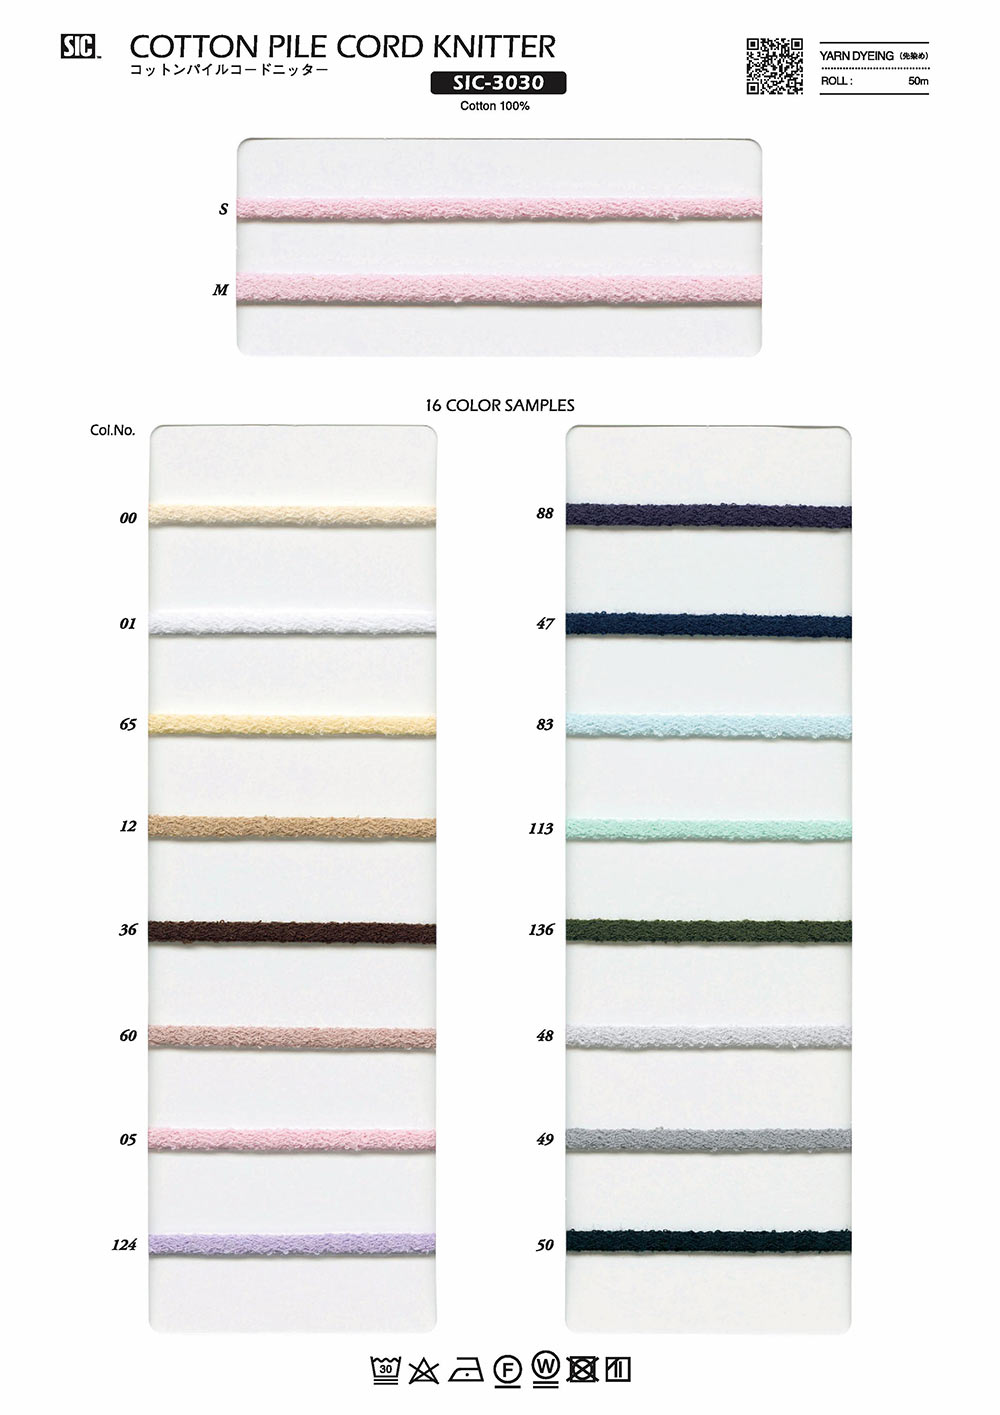 SIC-3030 Cotton Pile Cord Knitter[Ribbon Tape Cord] SHINDO(SIC)